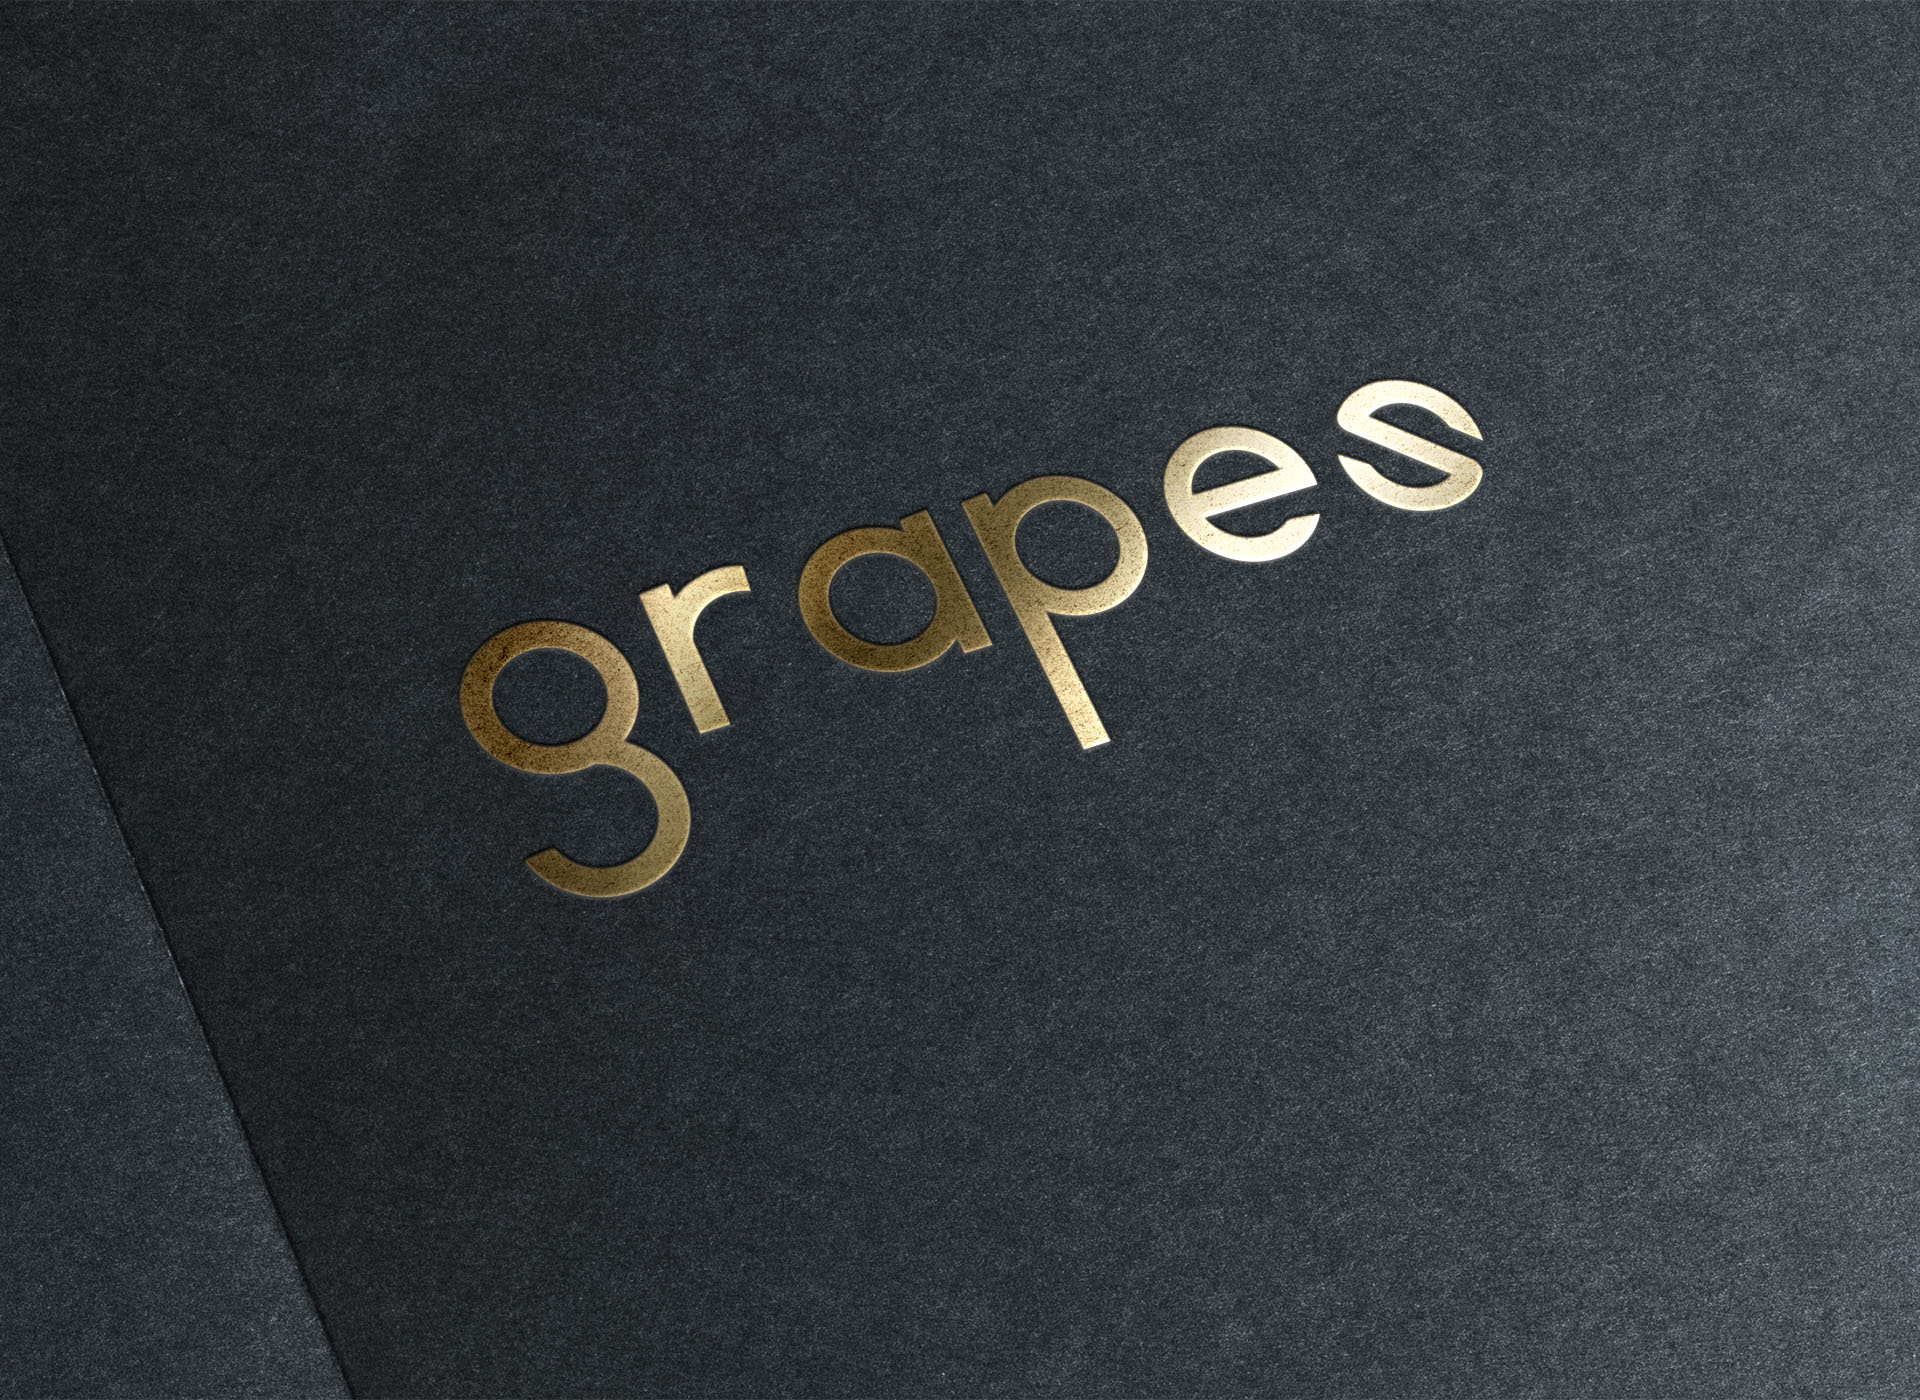 Grapes wine bar portfolio inoveo logo